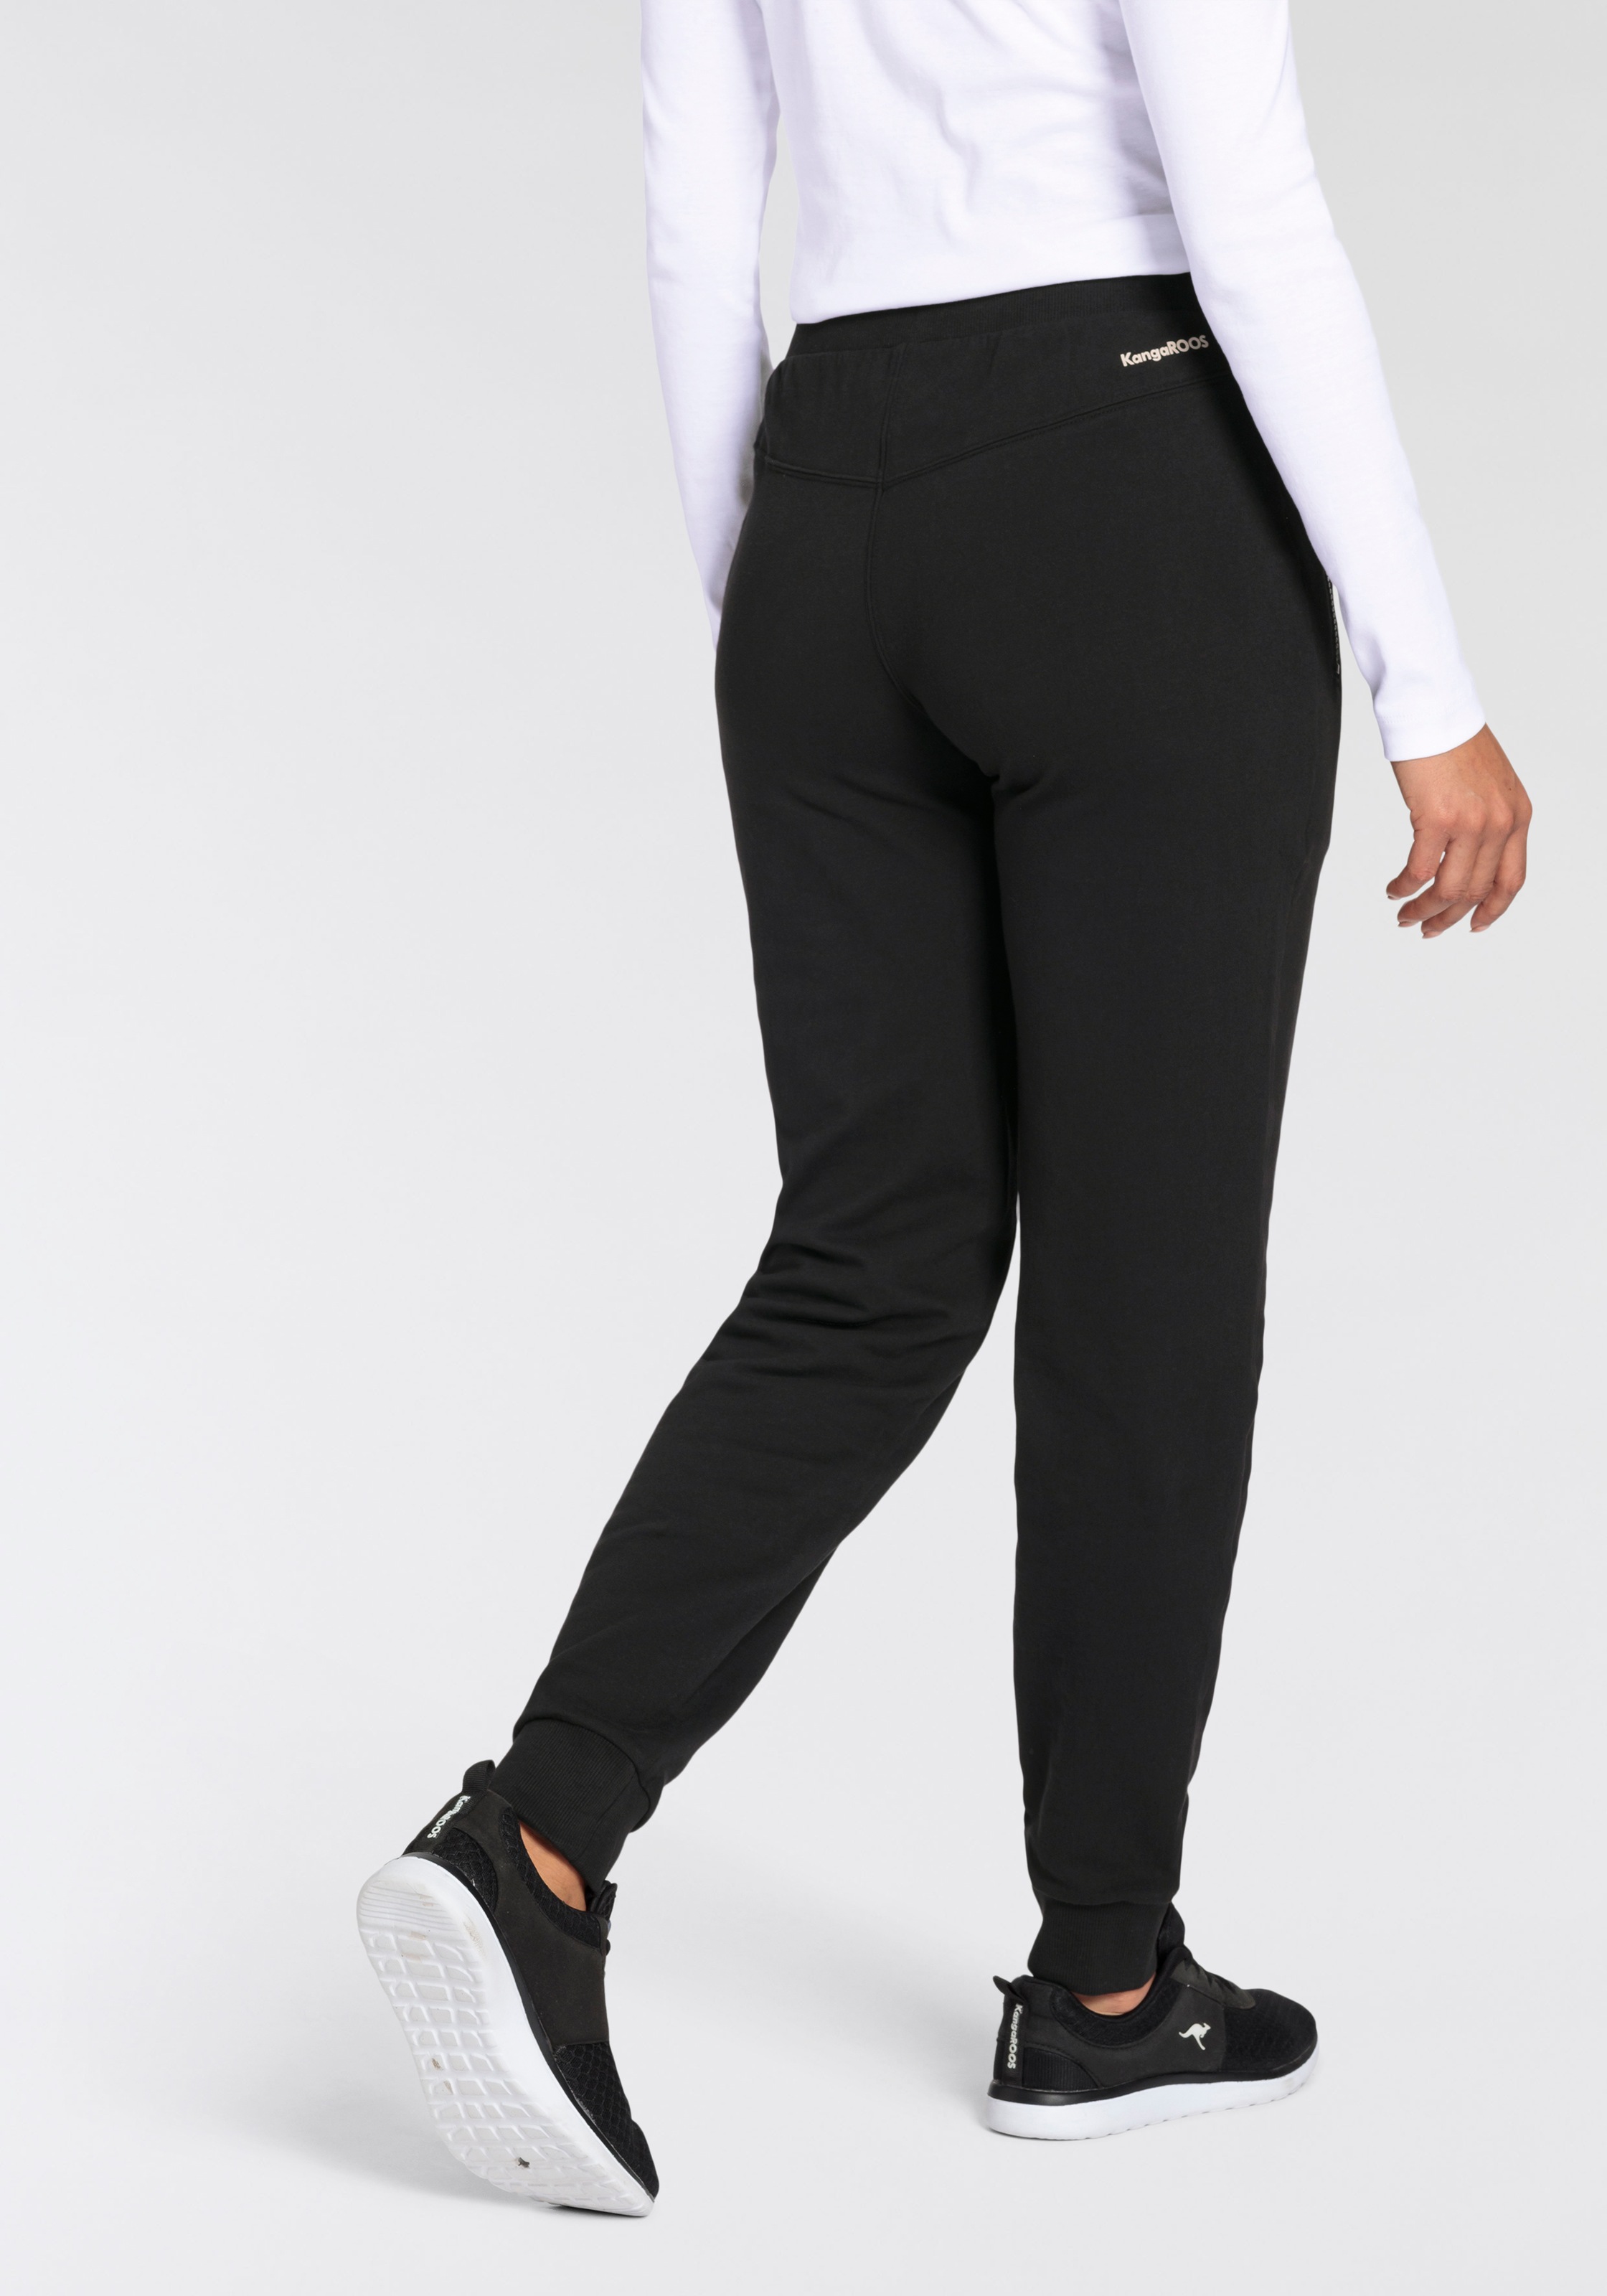 Zippertaschen KangaROOS Pants, Sweatpants mit Logo Jetzt String -NEUE und KOLLEKTION bestellen Jogger